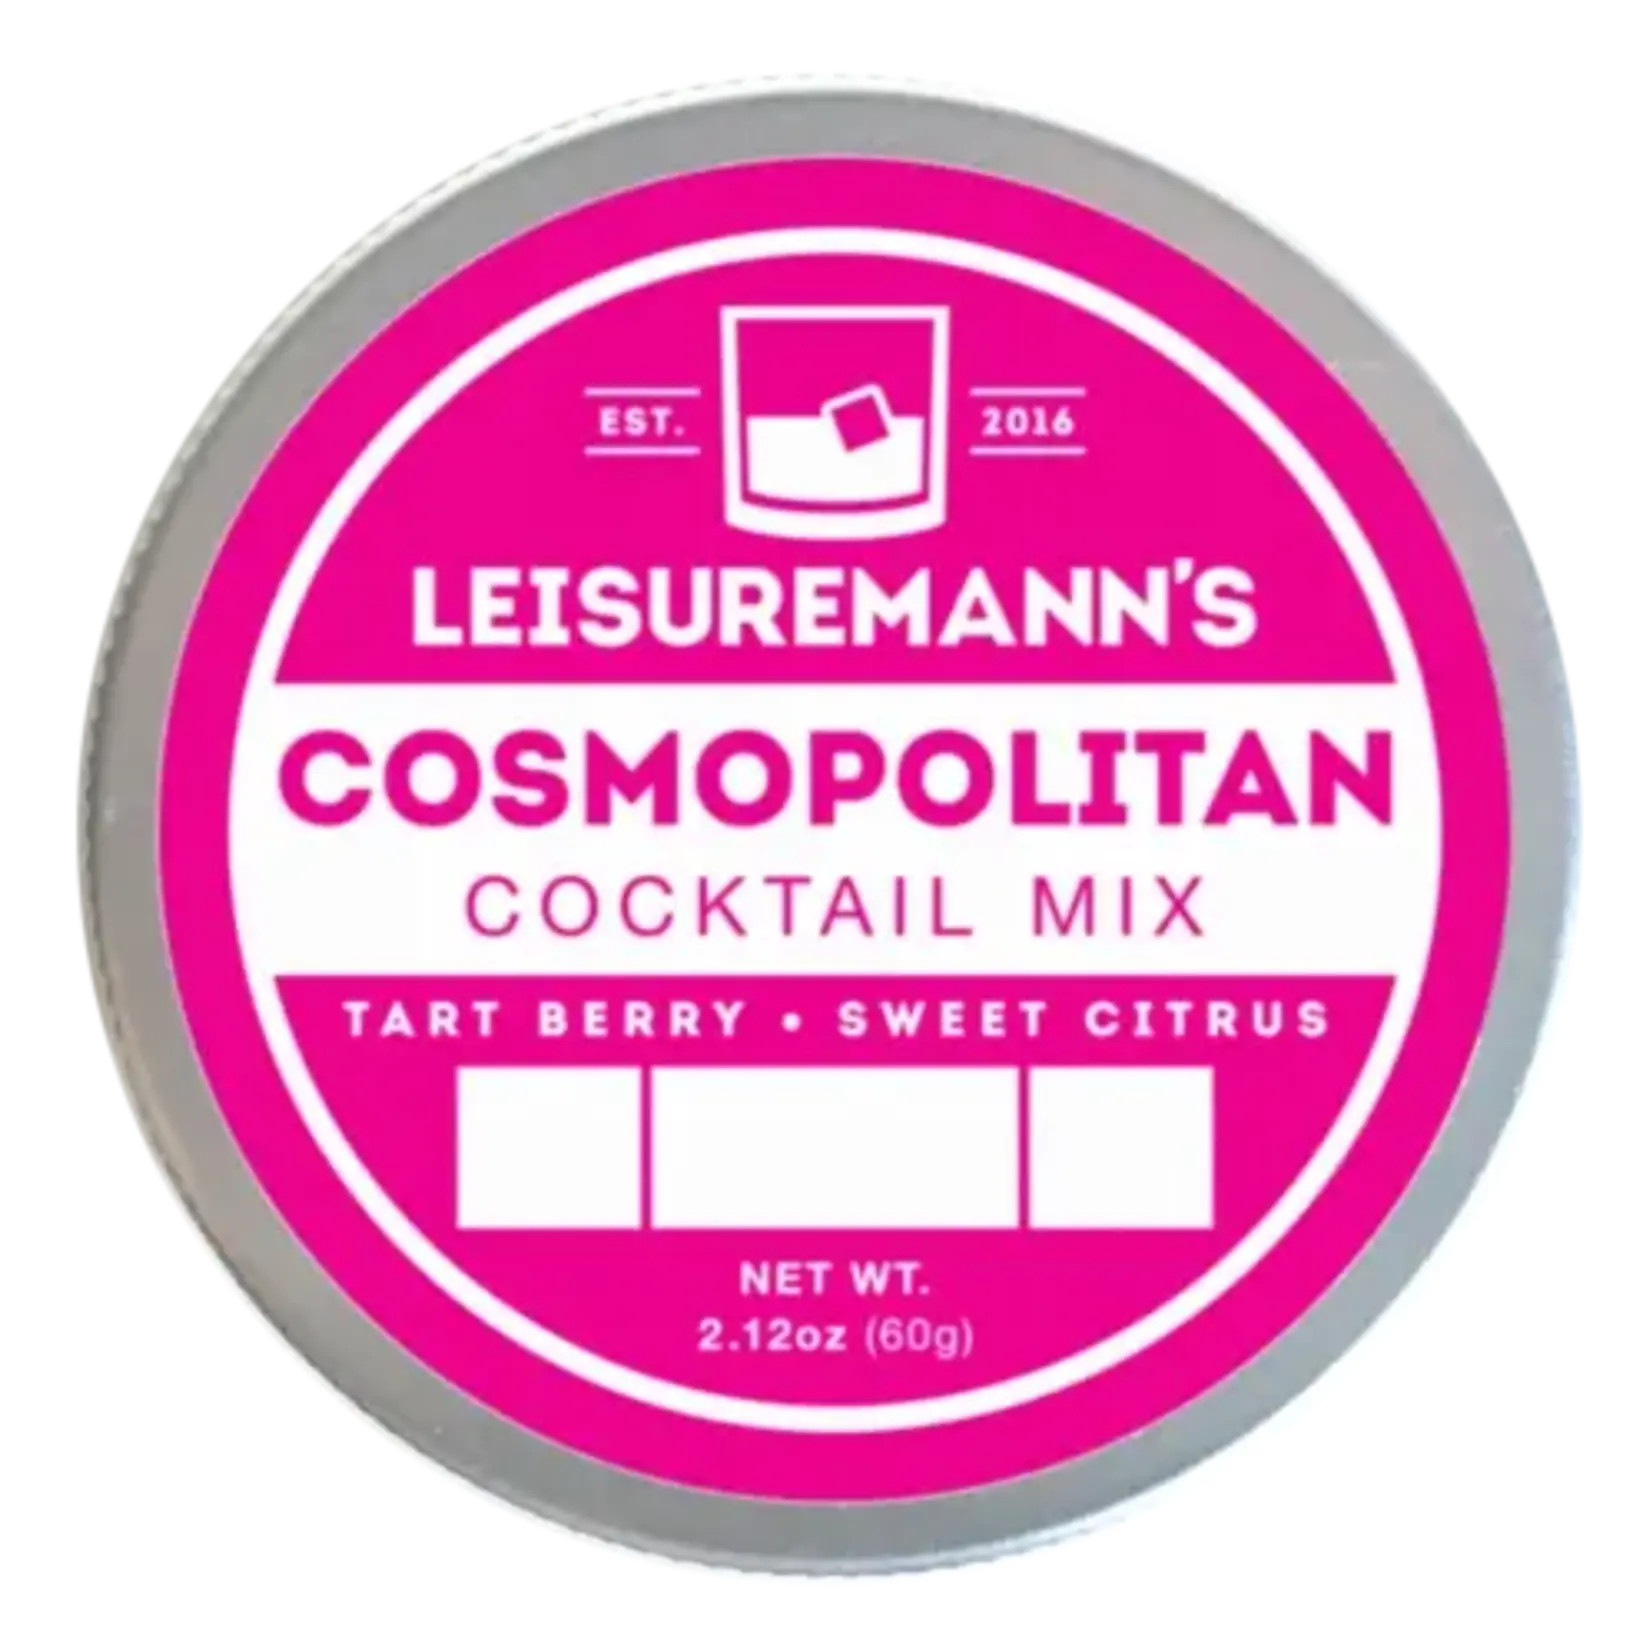 Leisuremann's Cocktail Mixes Leisuremann's Cocktail Mixes